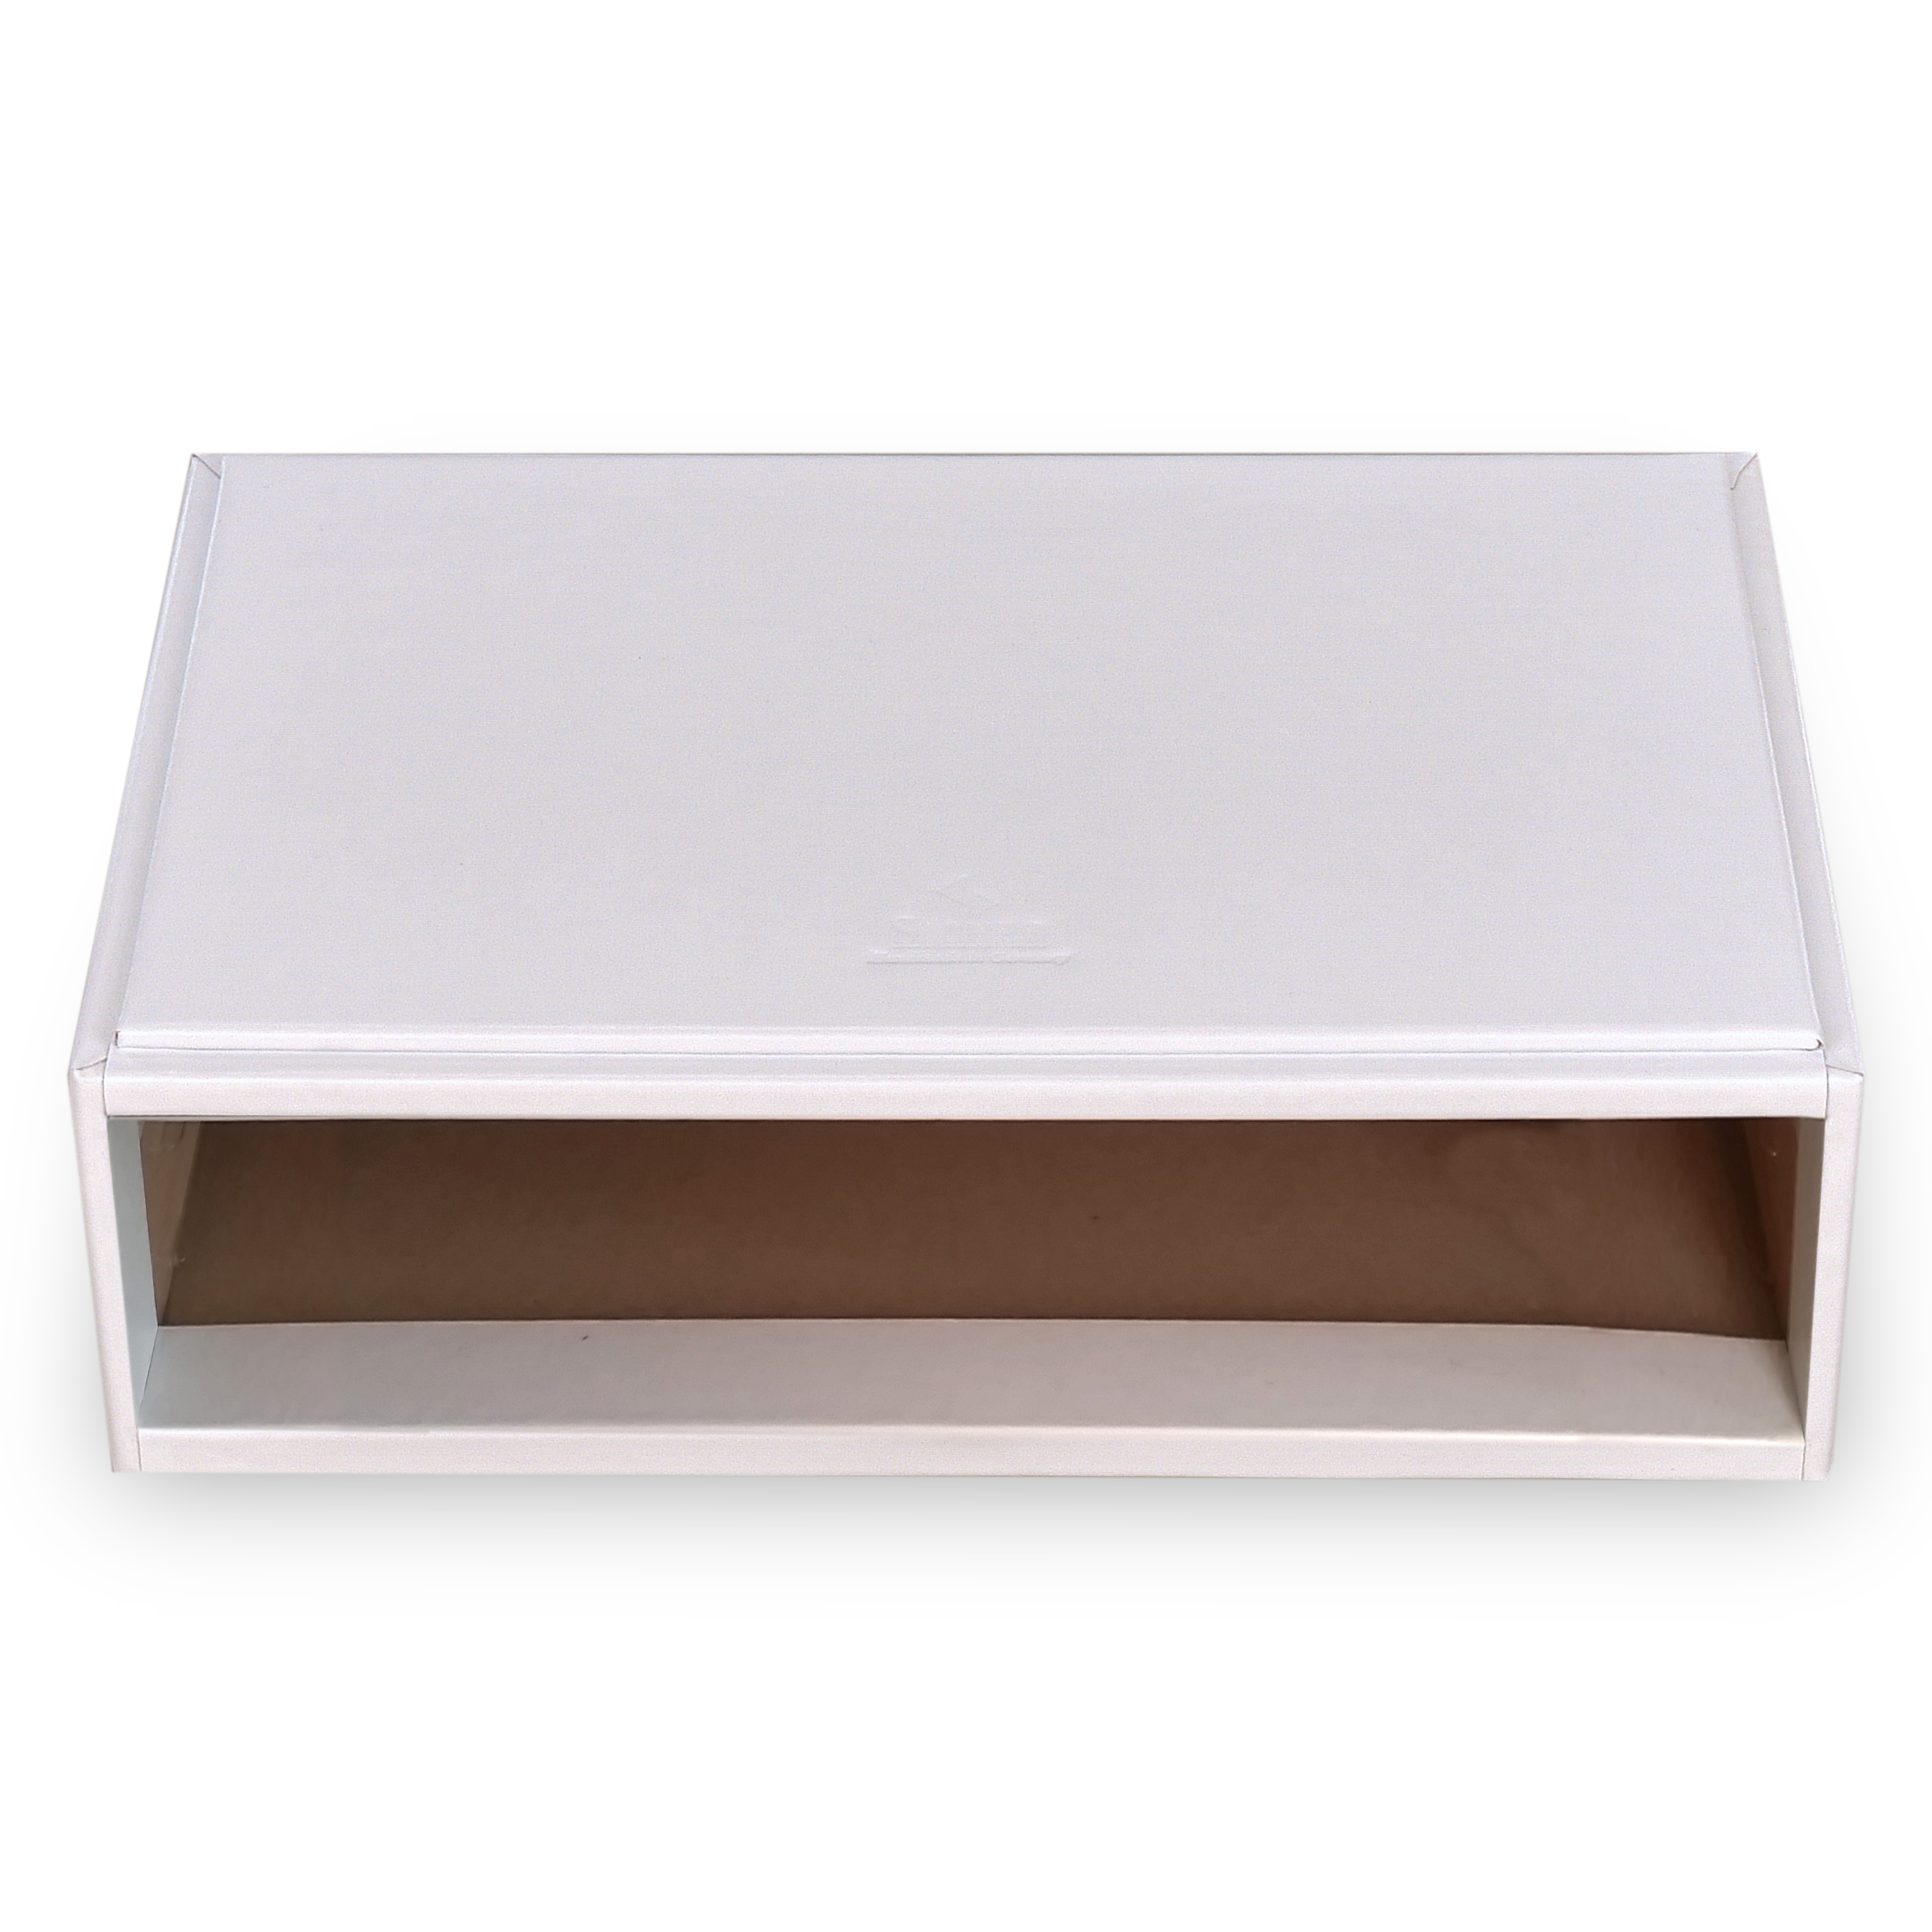 Flex module (without drawers) VARIO vario / white (leather) 